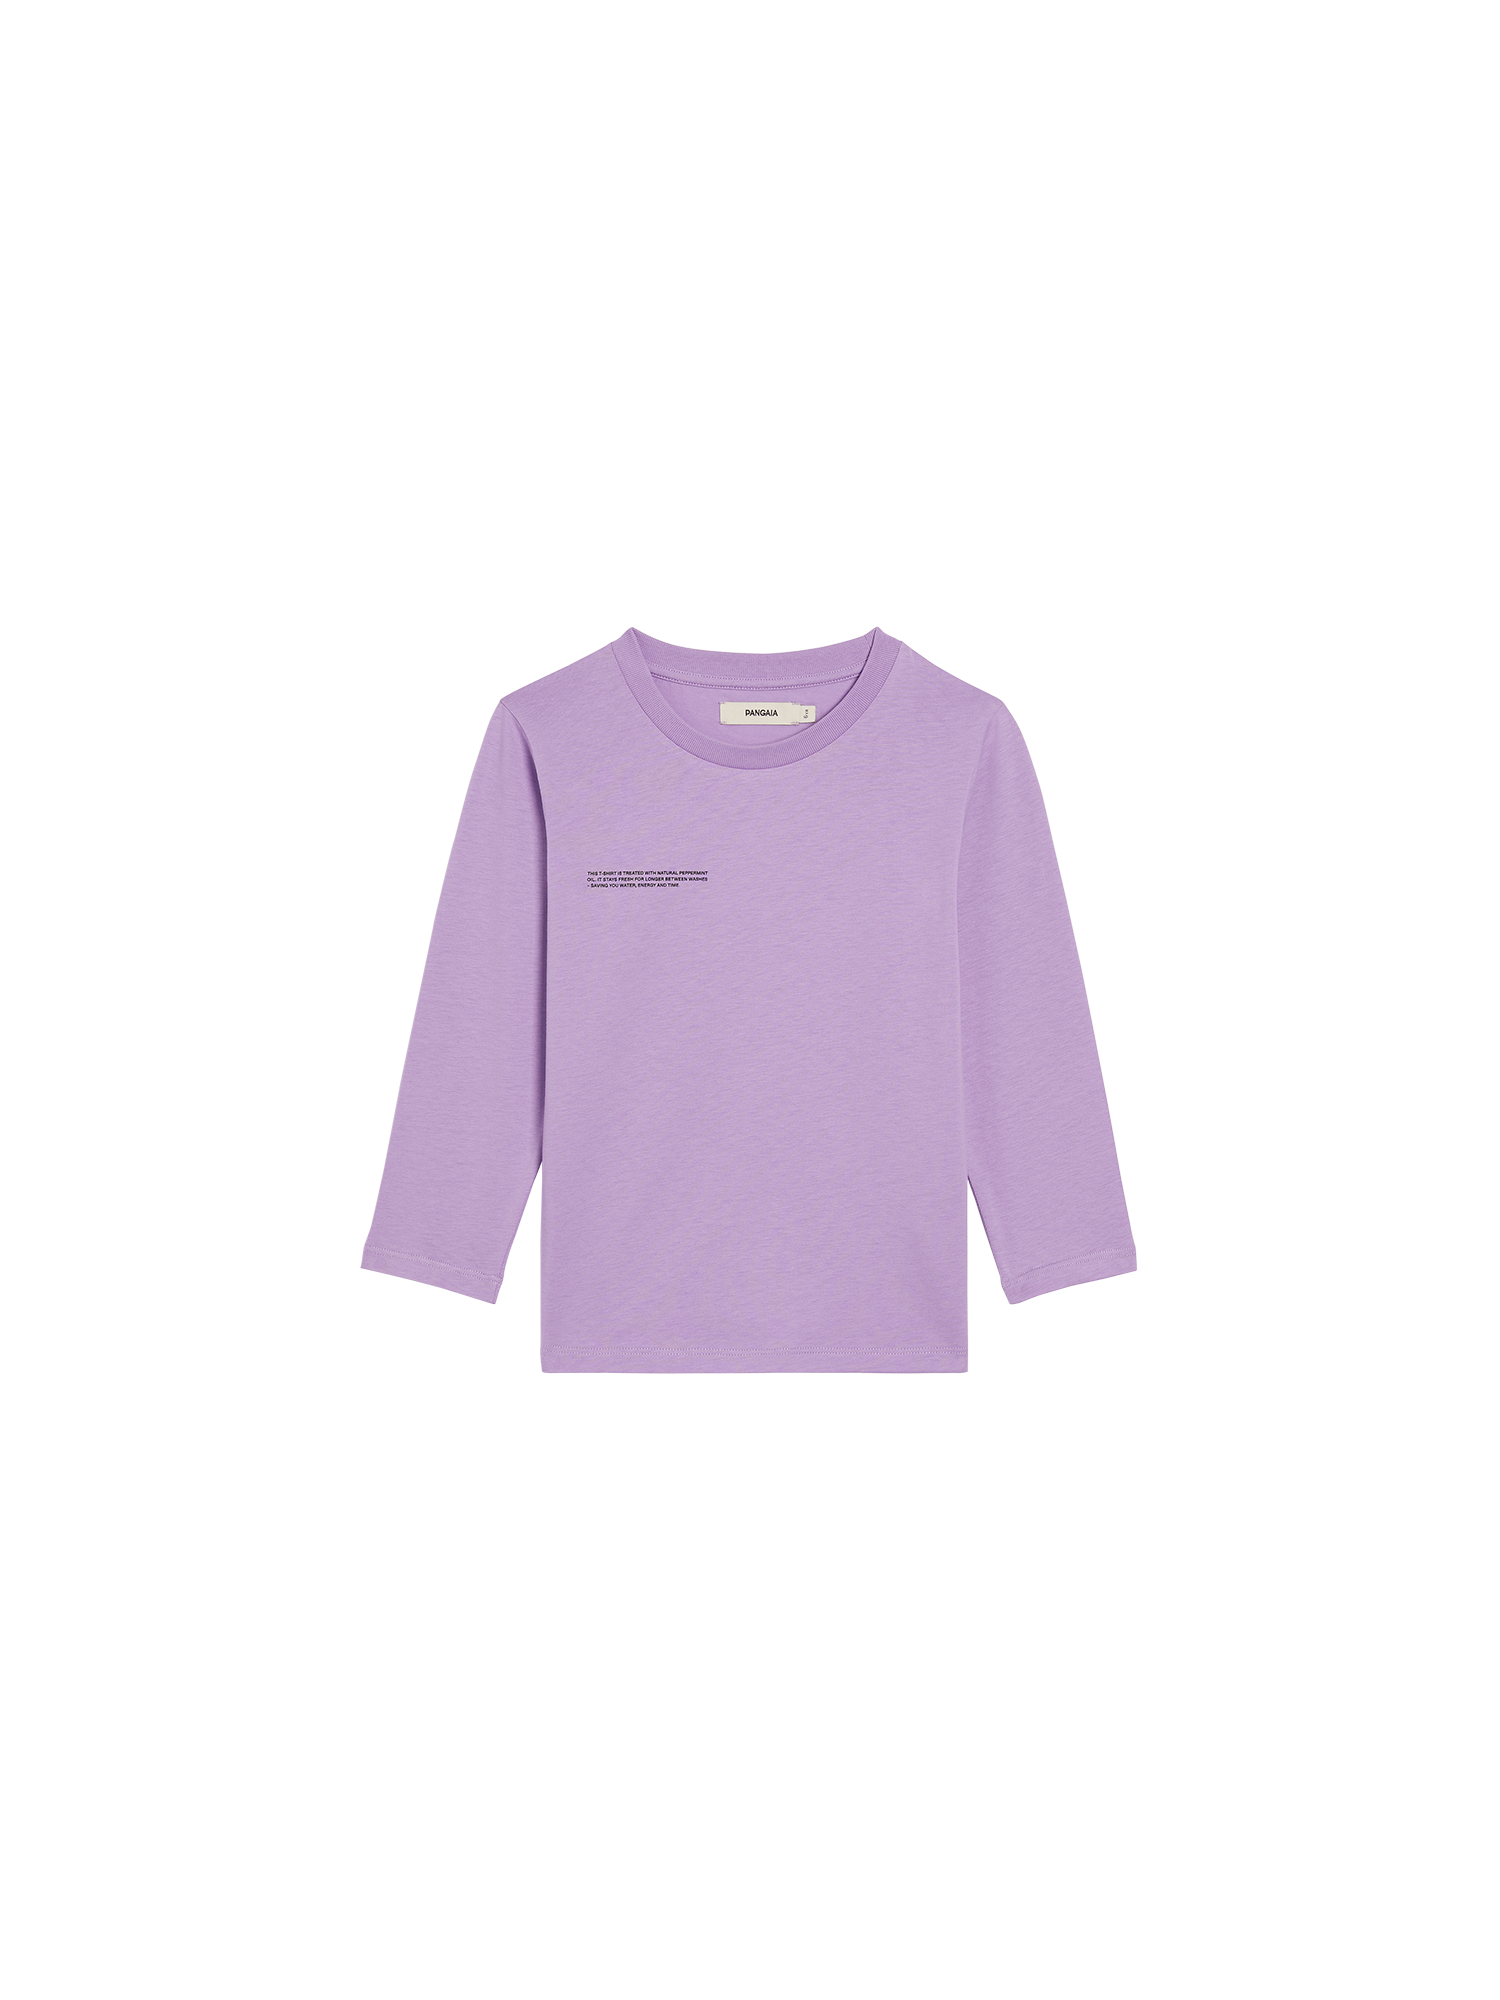 Kids 365 PPRMINT Long Sleeve T-shirt SS22—orchid purple-packshot-3